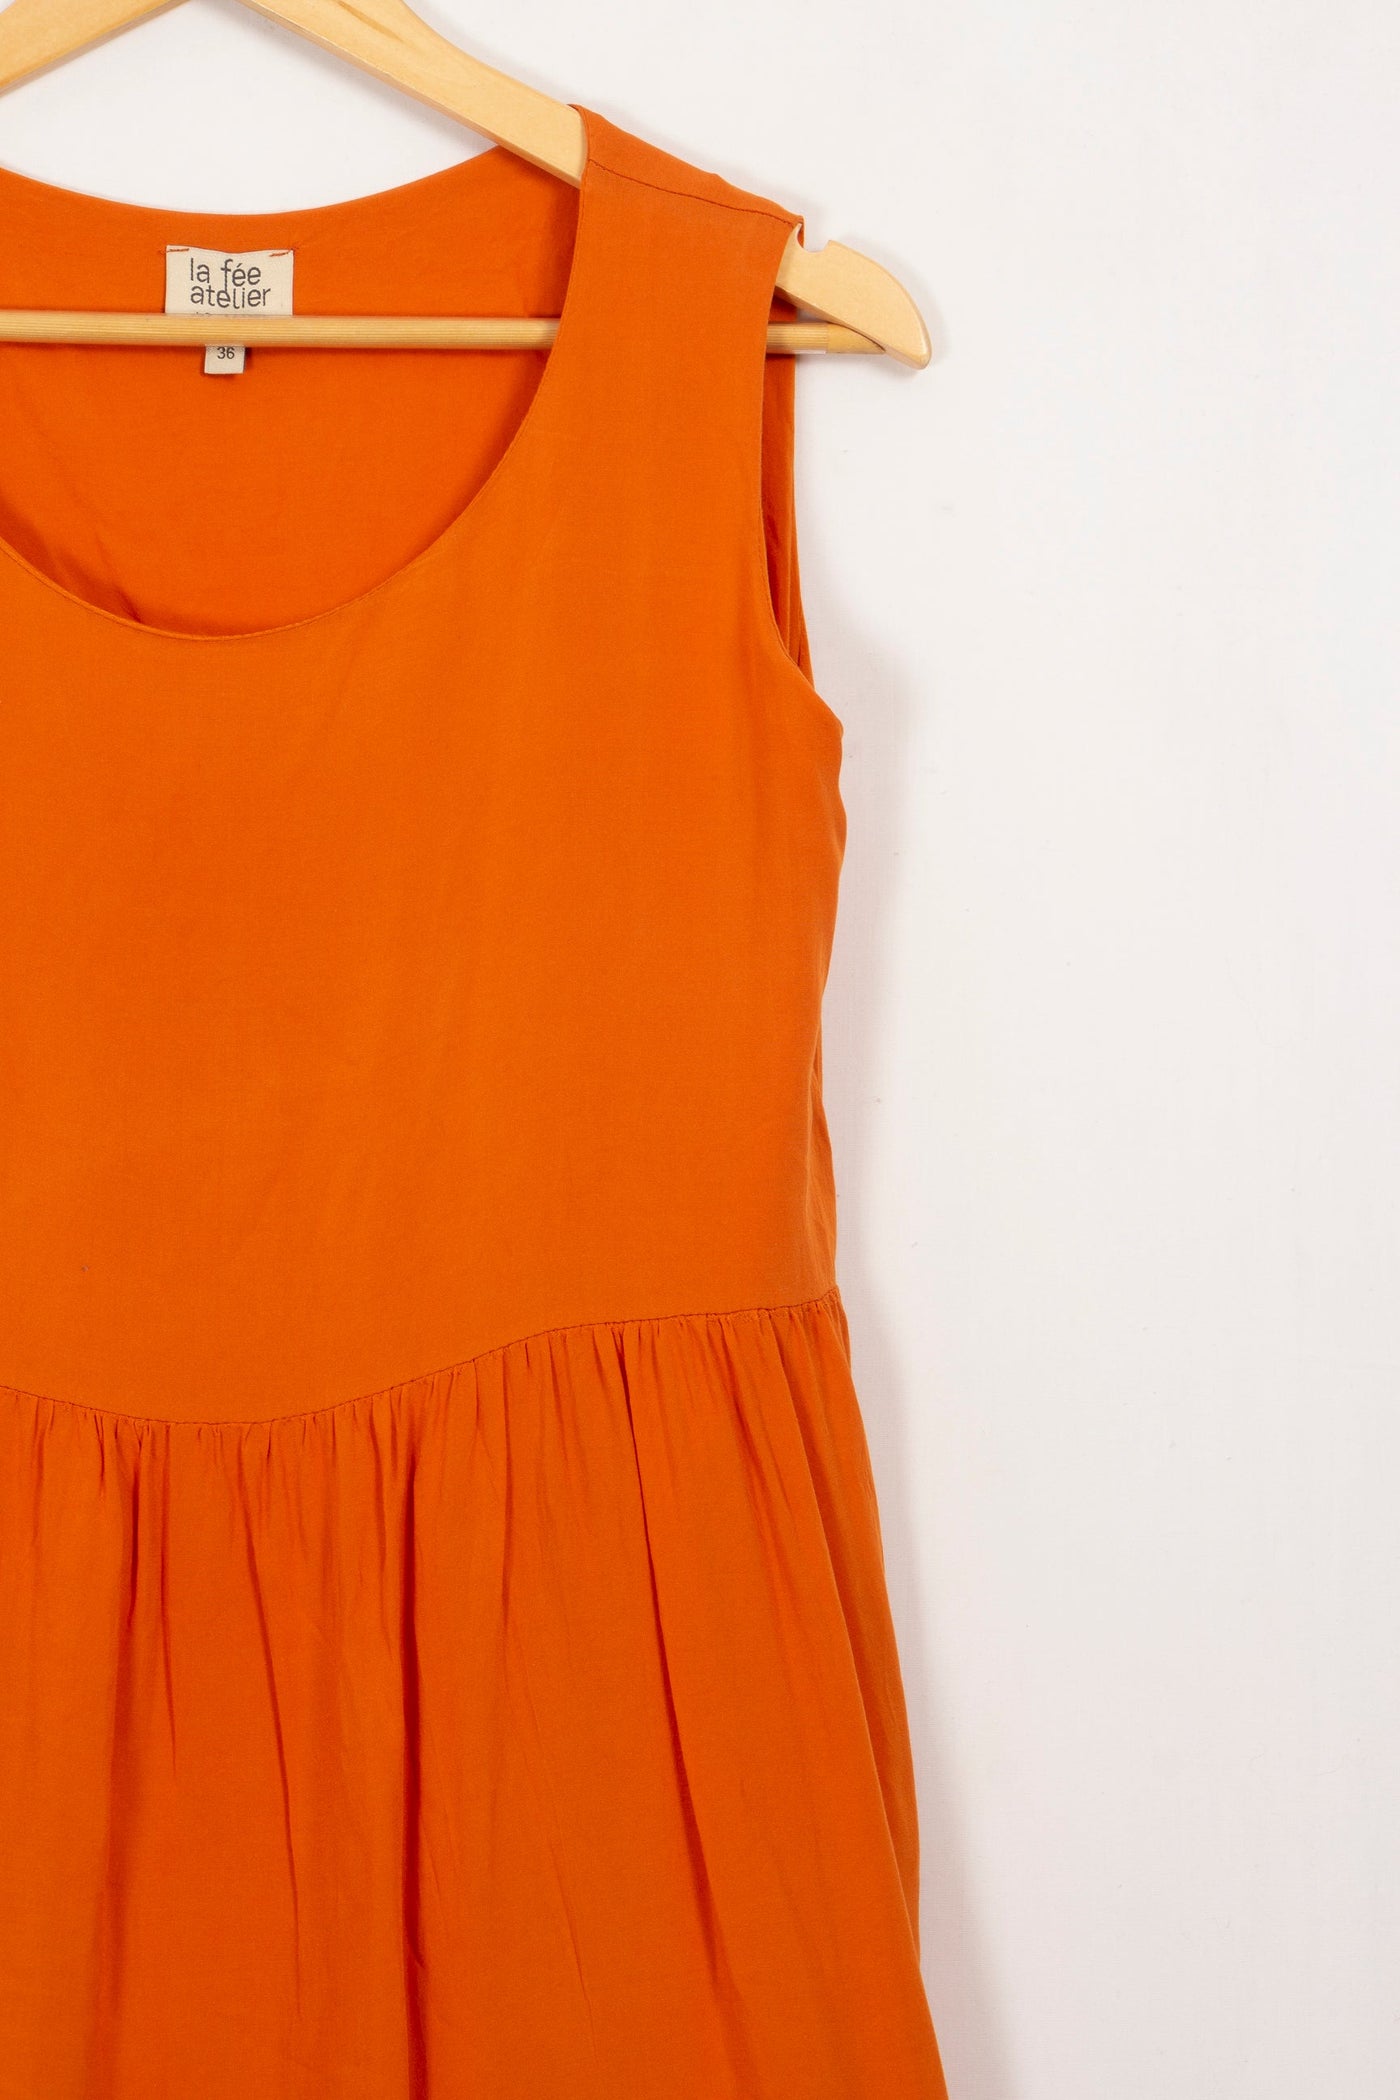 Robe orange La Fée Maraboutée - 36